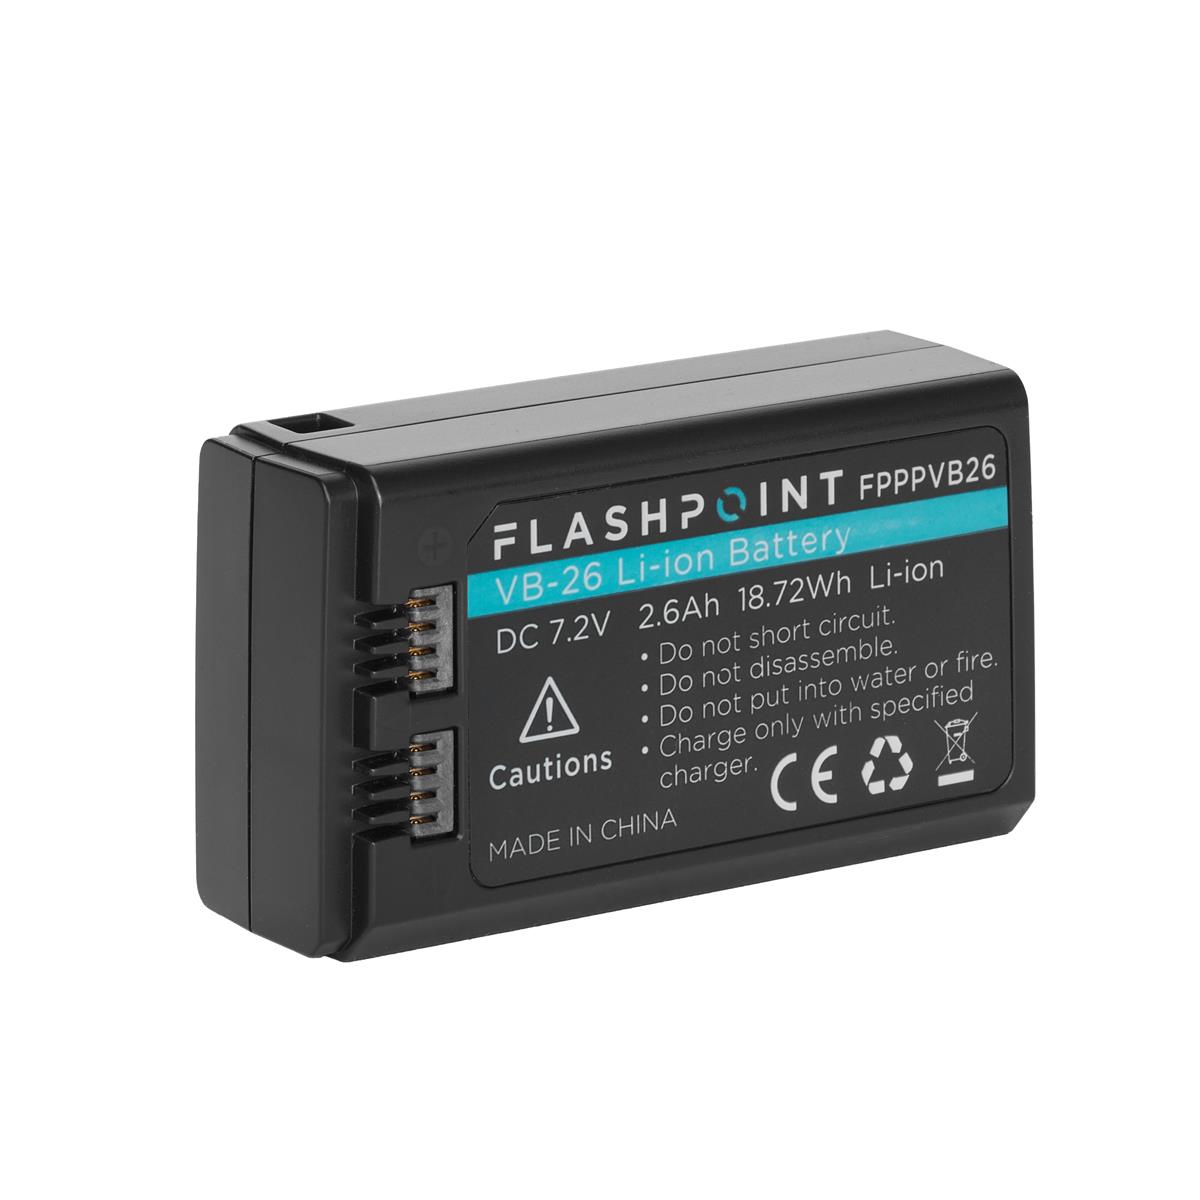 Image of Flashpoint VB-26 Li-ion Battery for the Zoom Li-ion X and Zoom Li-ion III